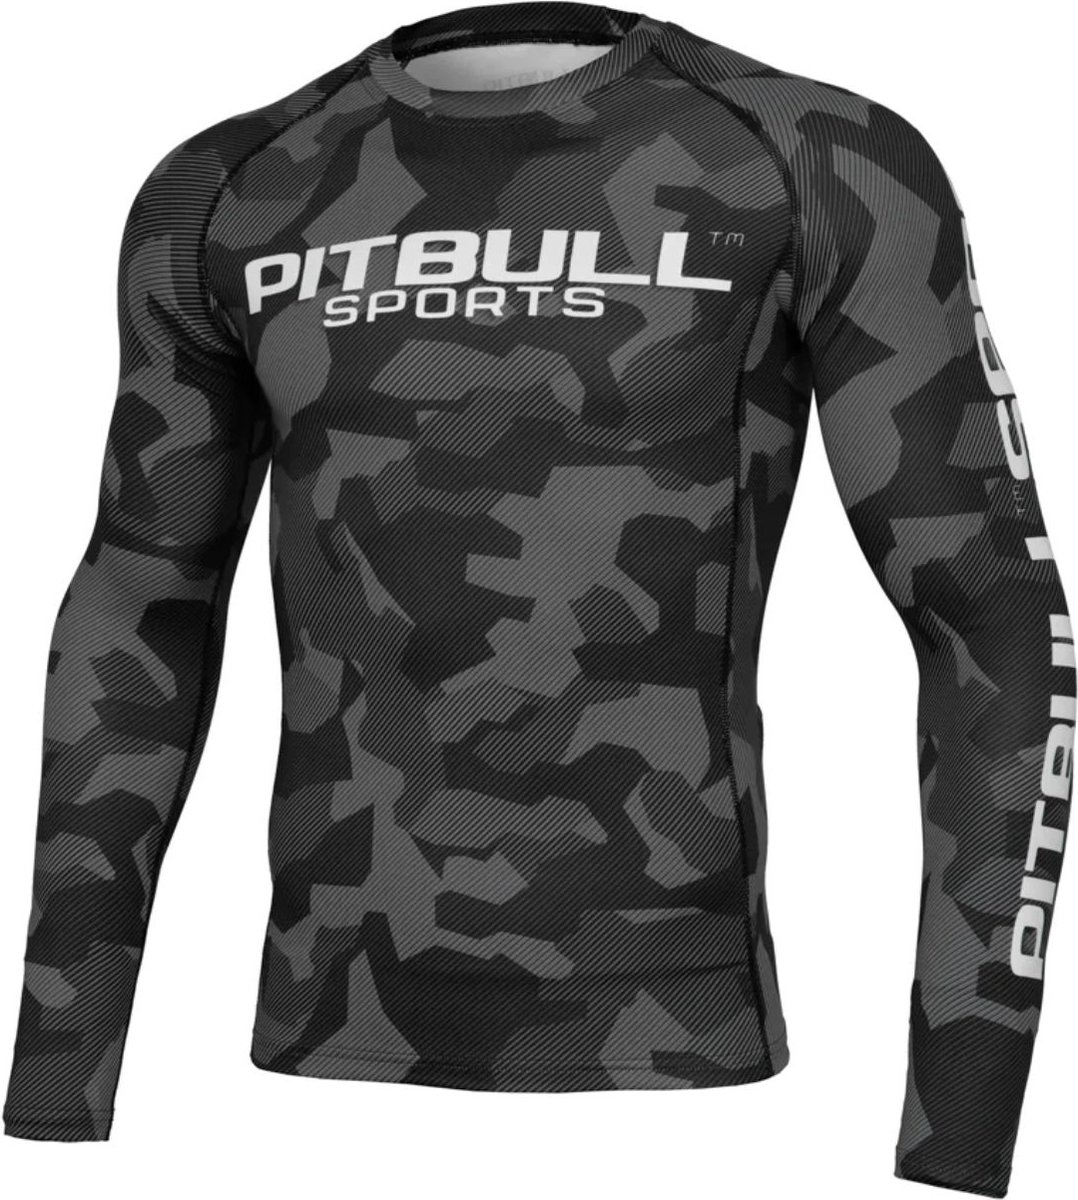 Pit Bull - Dillard Camo - Rashguard Long Sleeve - Compressie shirt lange mouwen - Grijs - Maat L